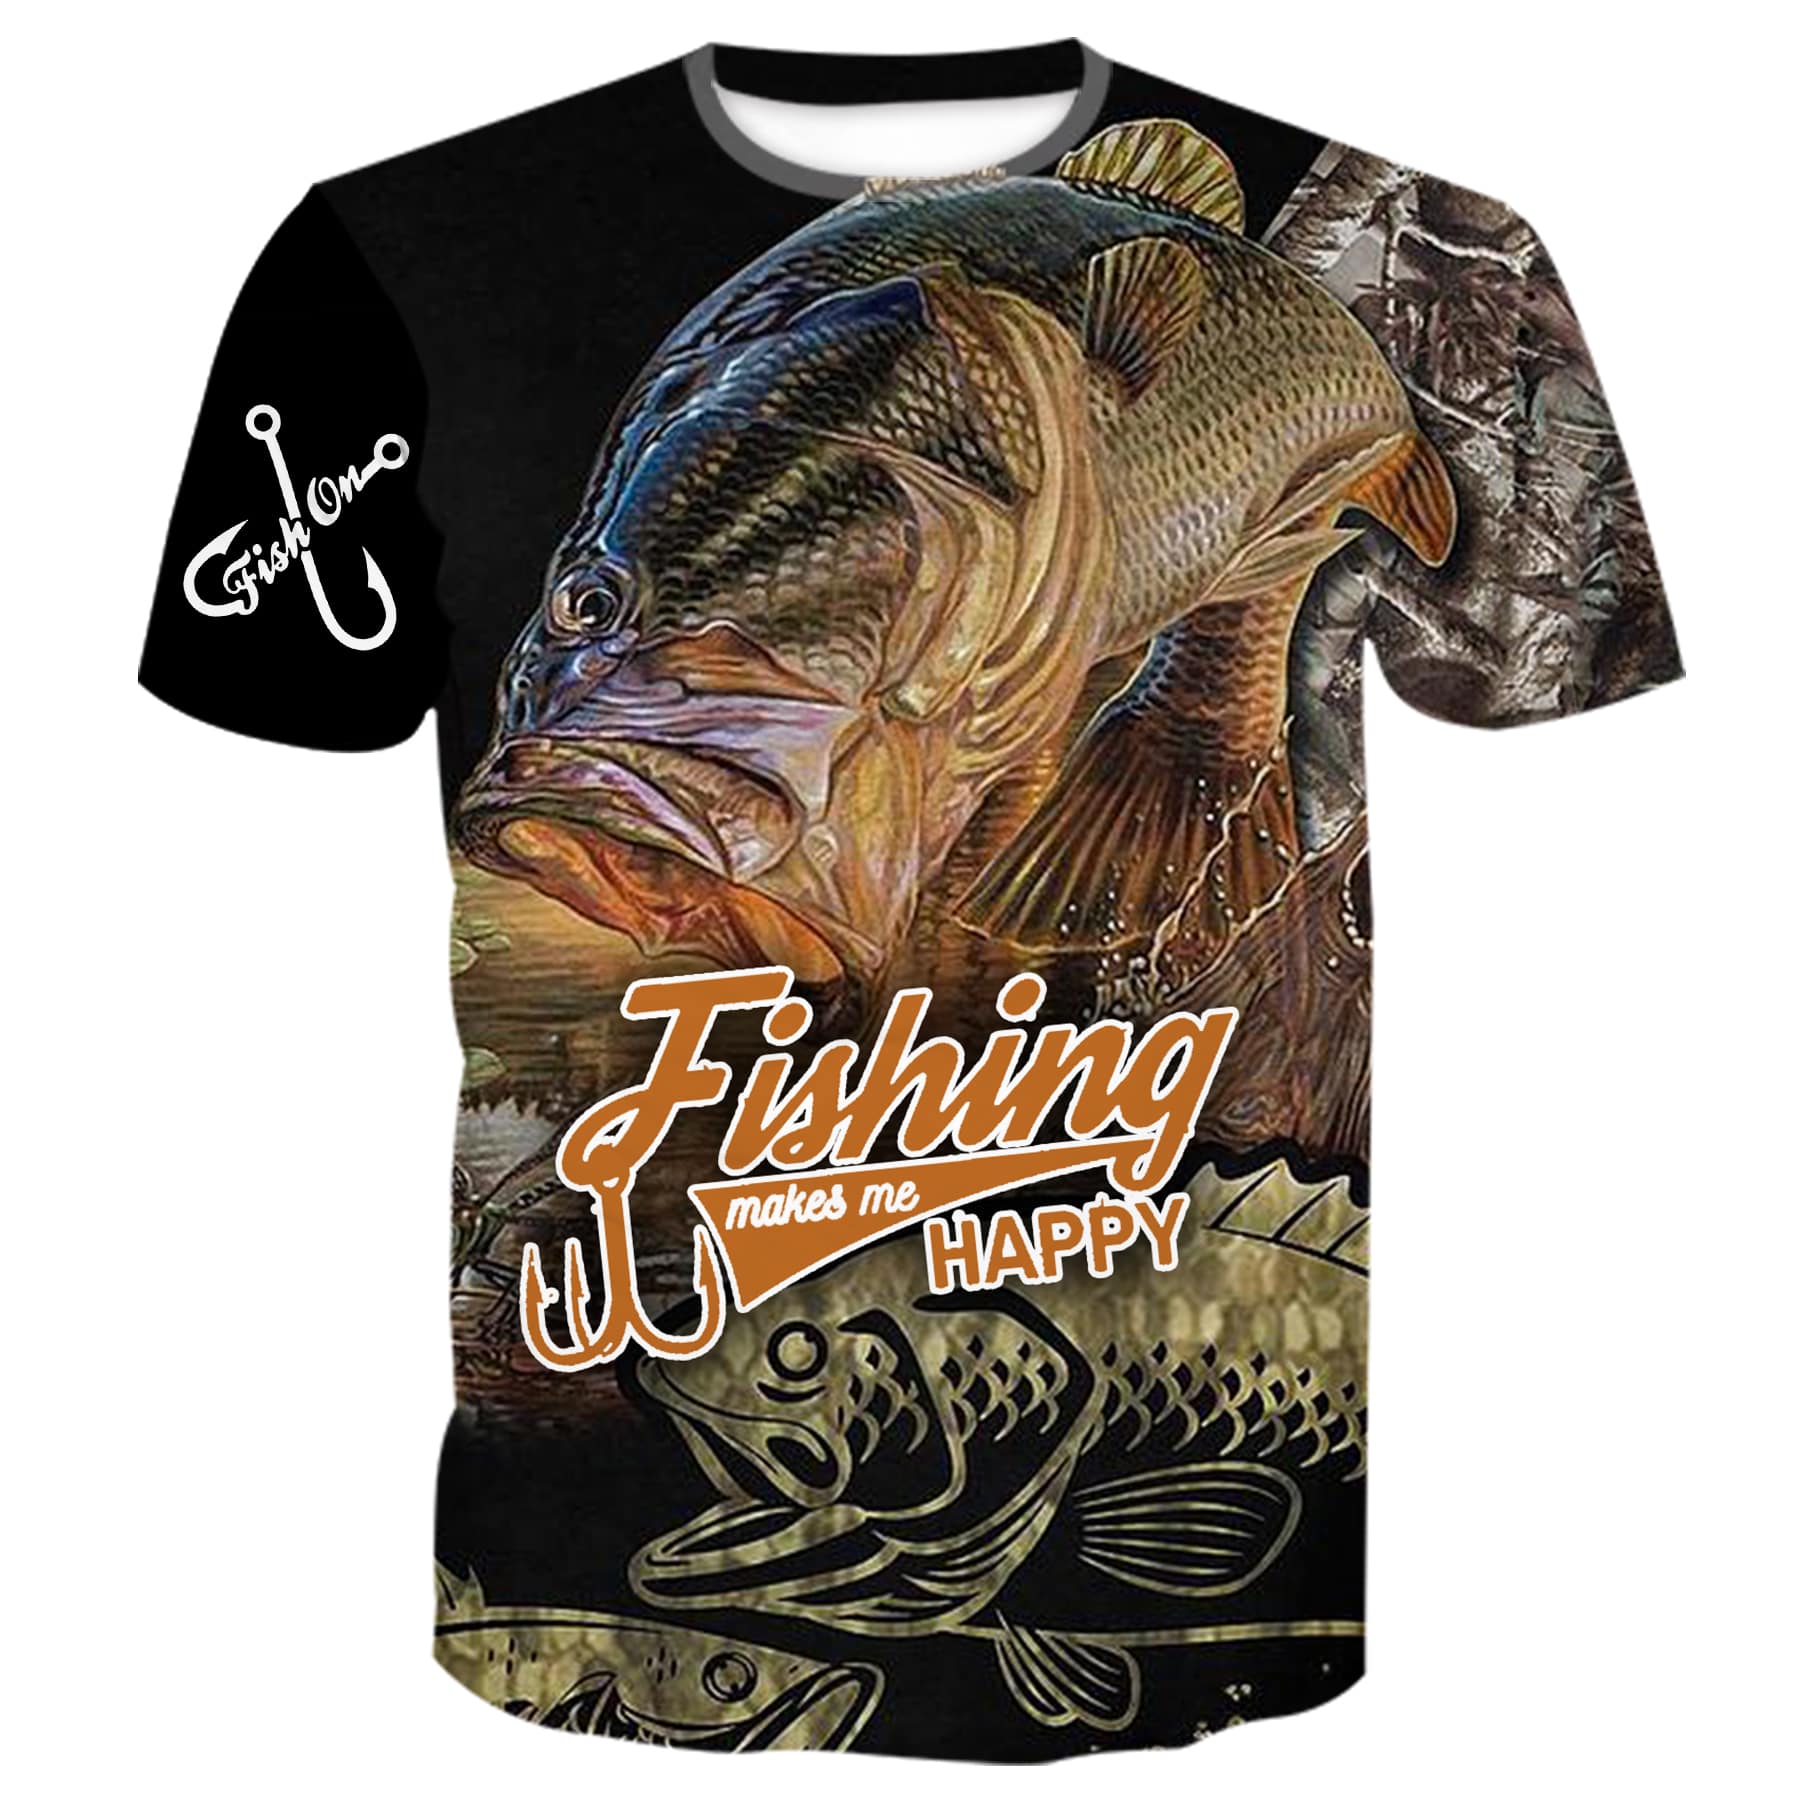 Bass Fishing makes me happy - Kid's T-Shirt